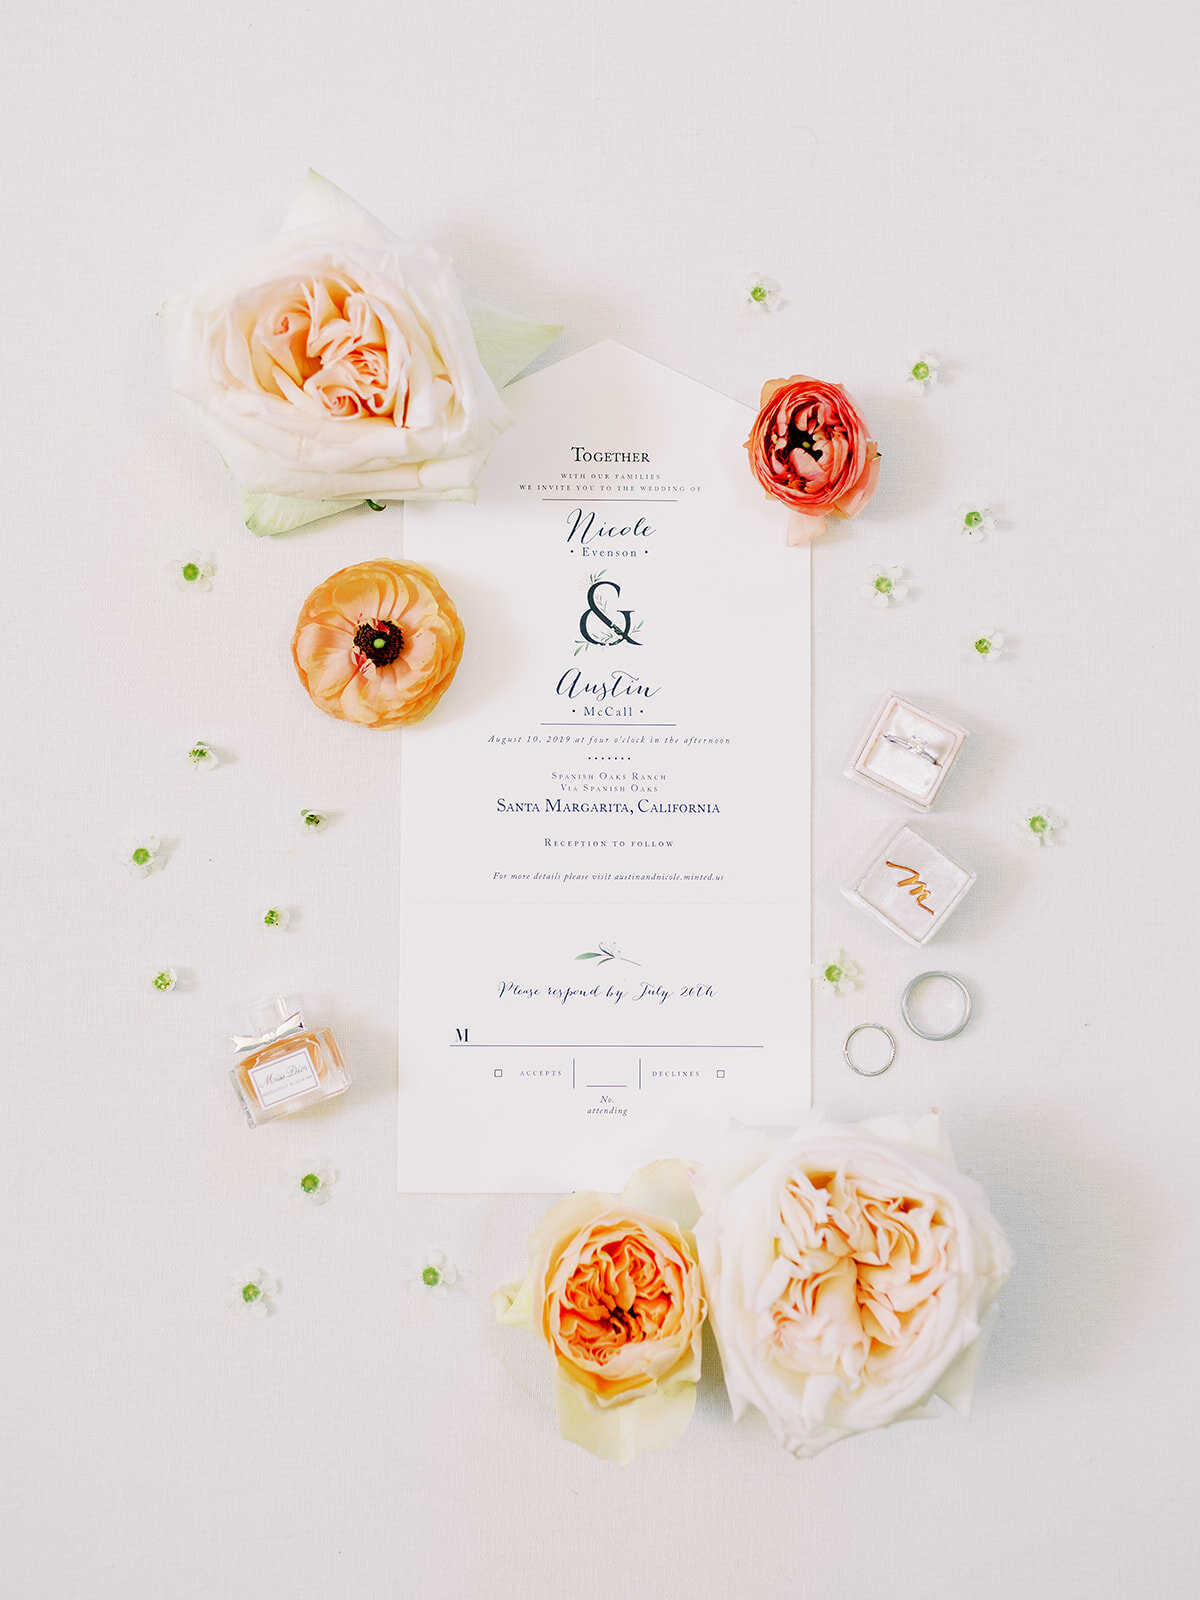 Austin & Nicole's Wedding - Natalie Schutt Photography - Details-1_websize.jpg